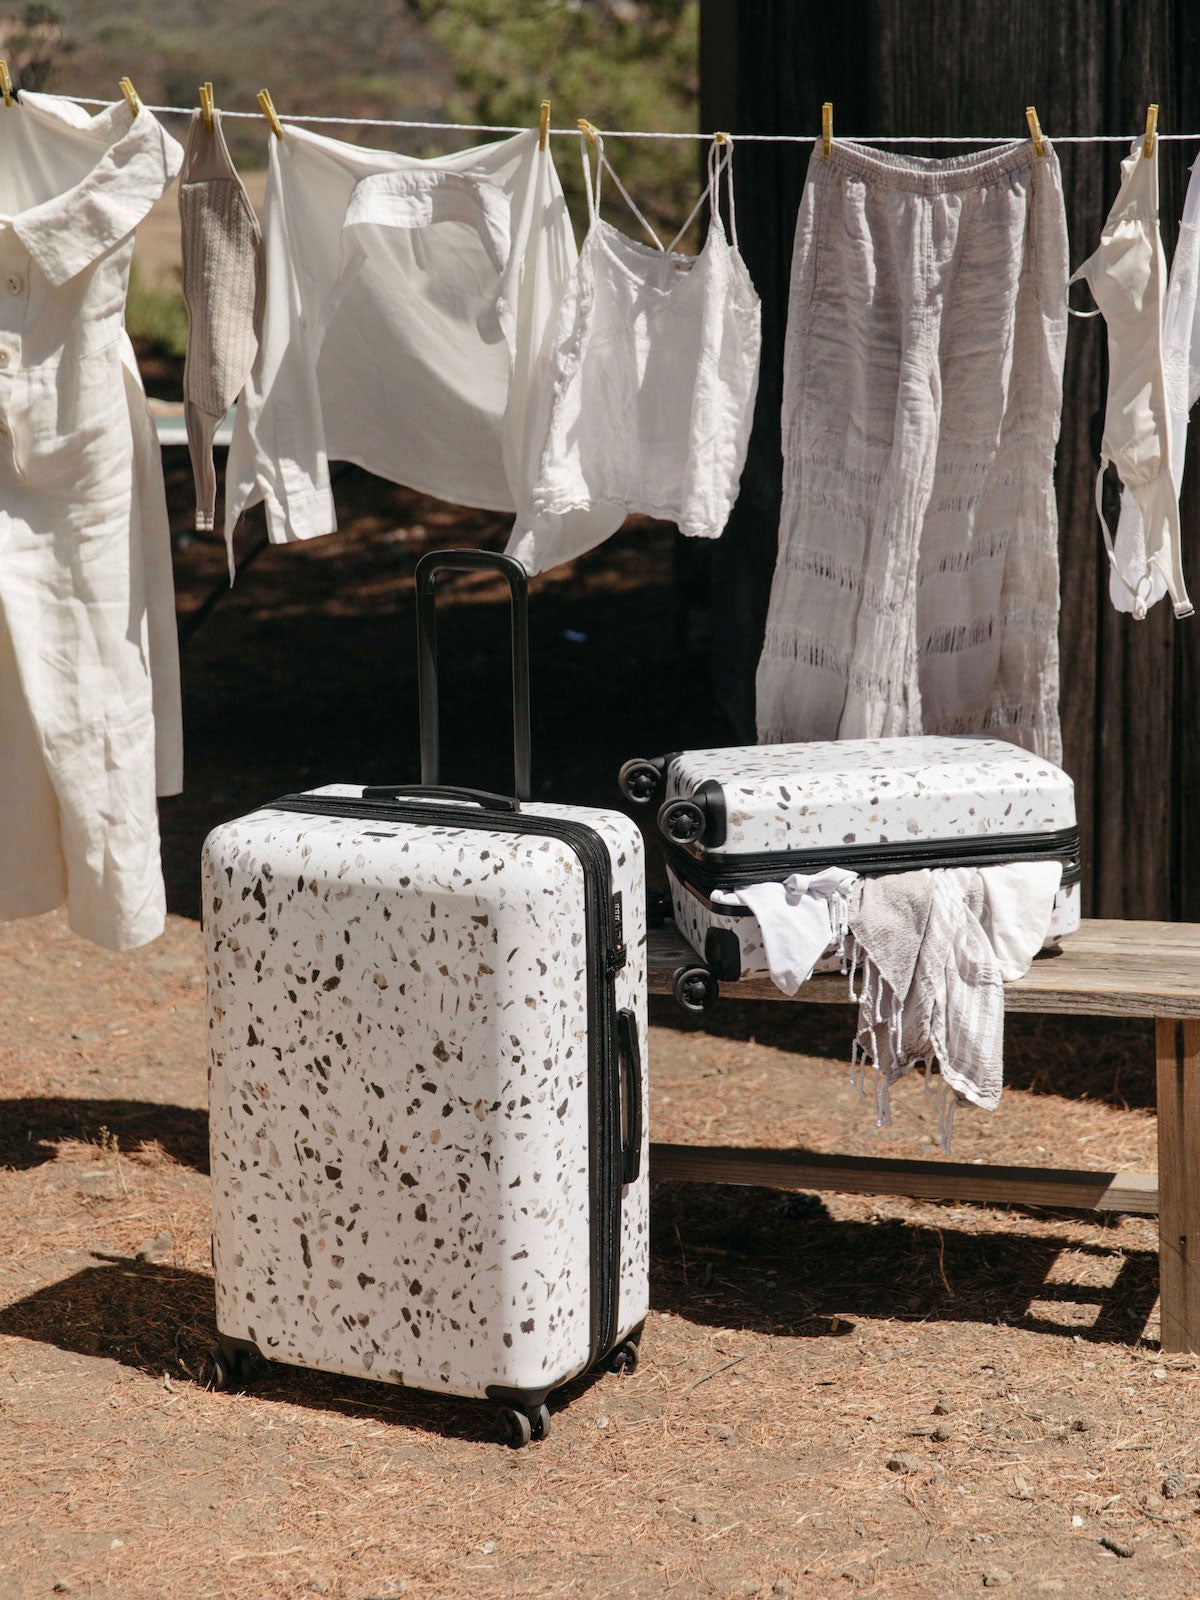 LARVENDER Luggage Sets 6 Piece, Expandable Hardshell Suitcase Set with  Spinner Wheels, Lightweight Travel Luggage Set TSA-Approved Lock with 2  Travel